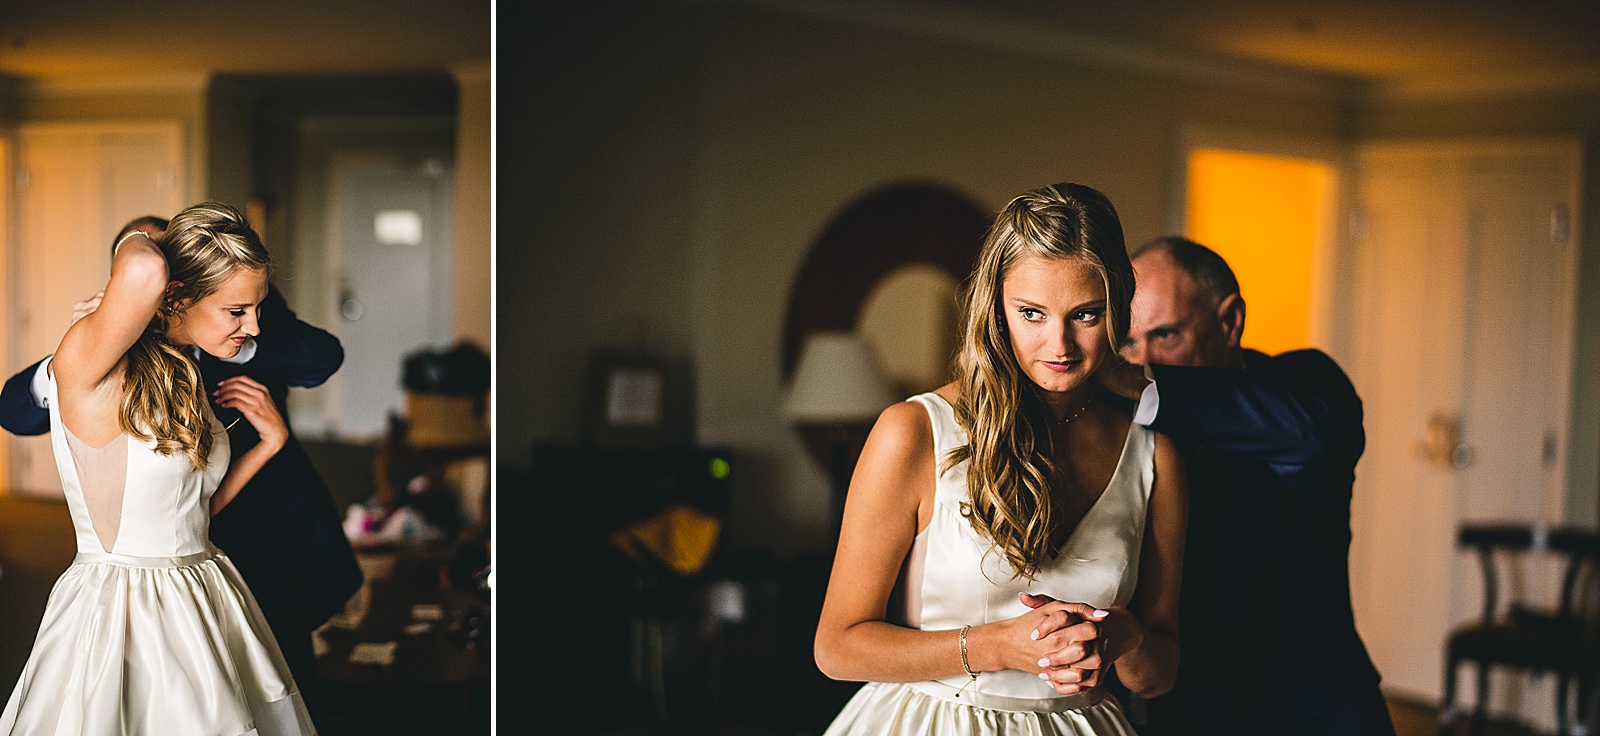 17 bride gift ideas - The Glen Club Wedding Photos // Katie + Nick